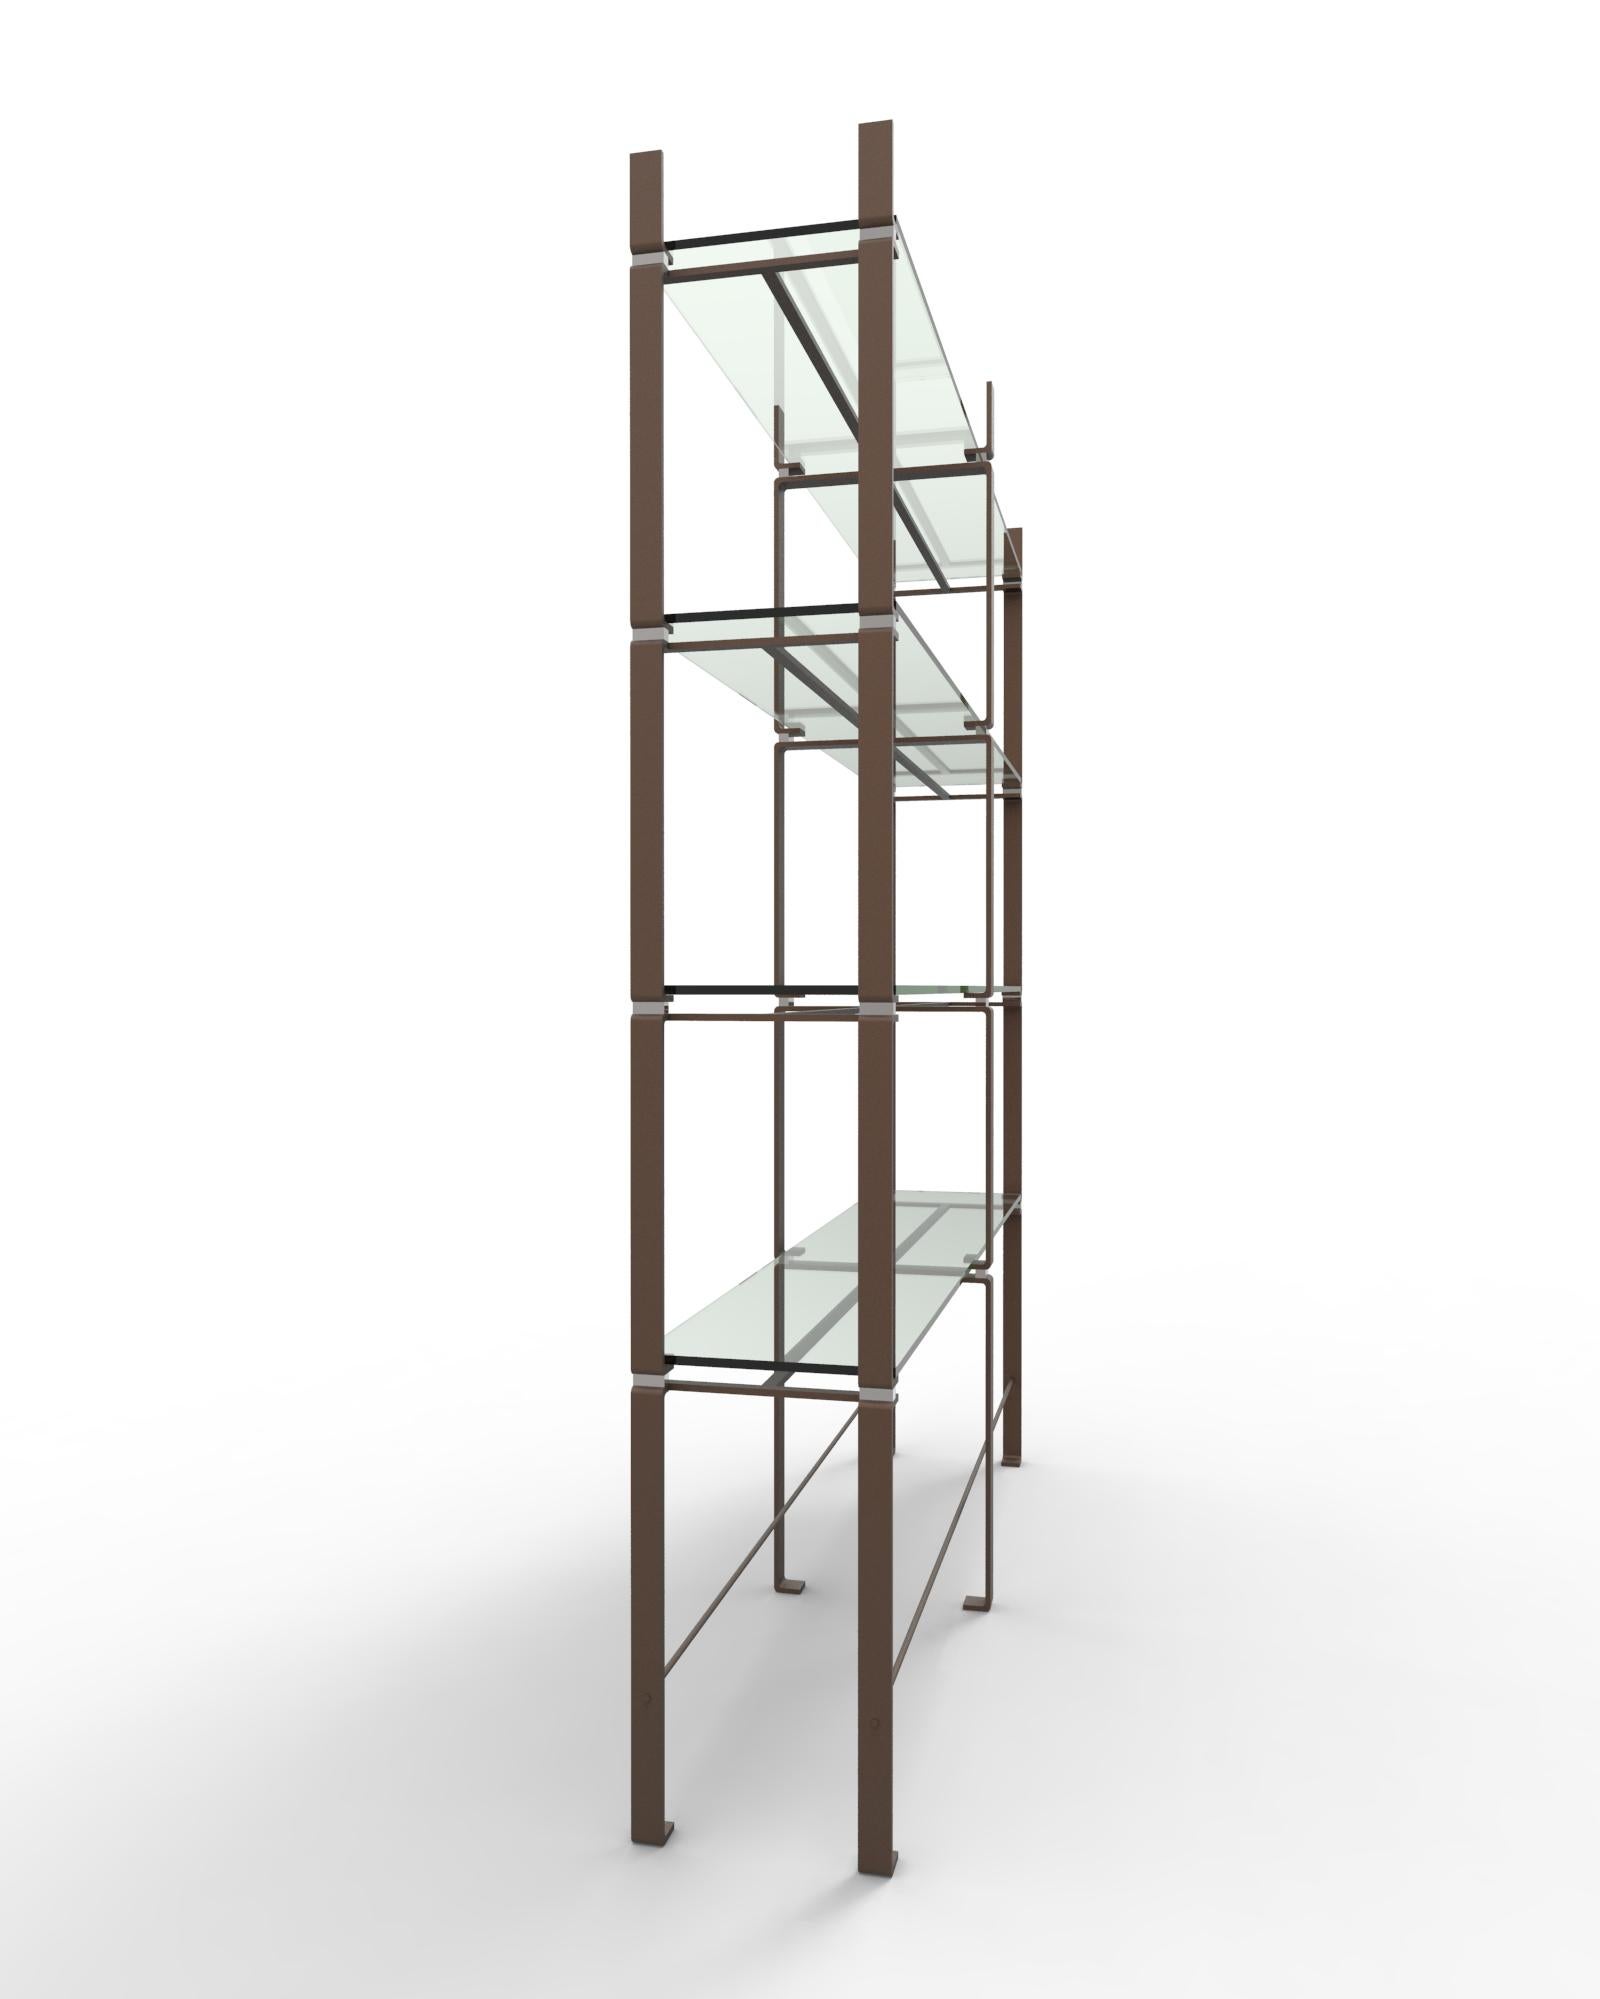 Other Double Etagere Shelves by Gentner Design For Sale